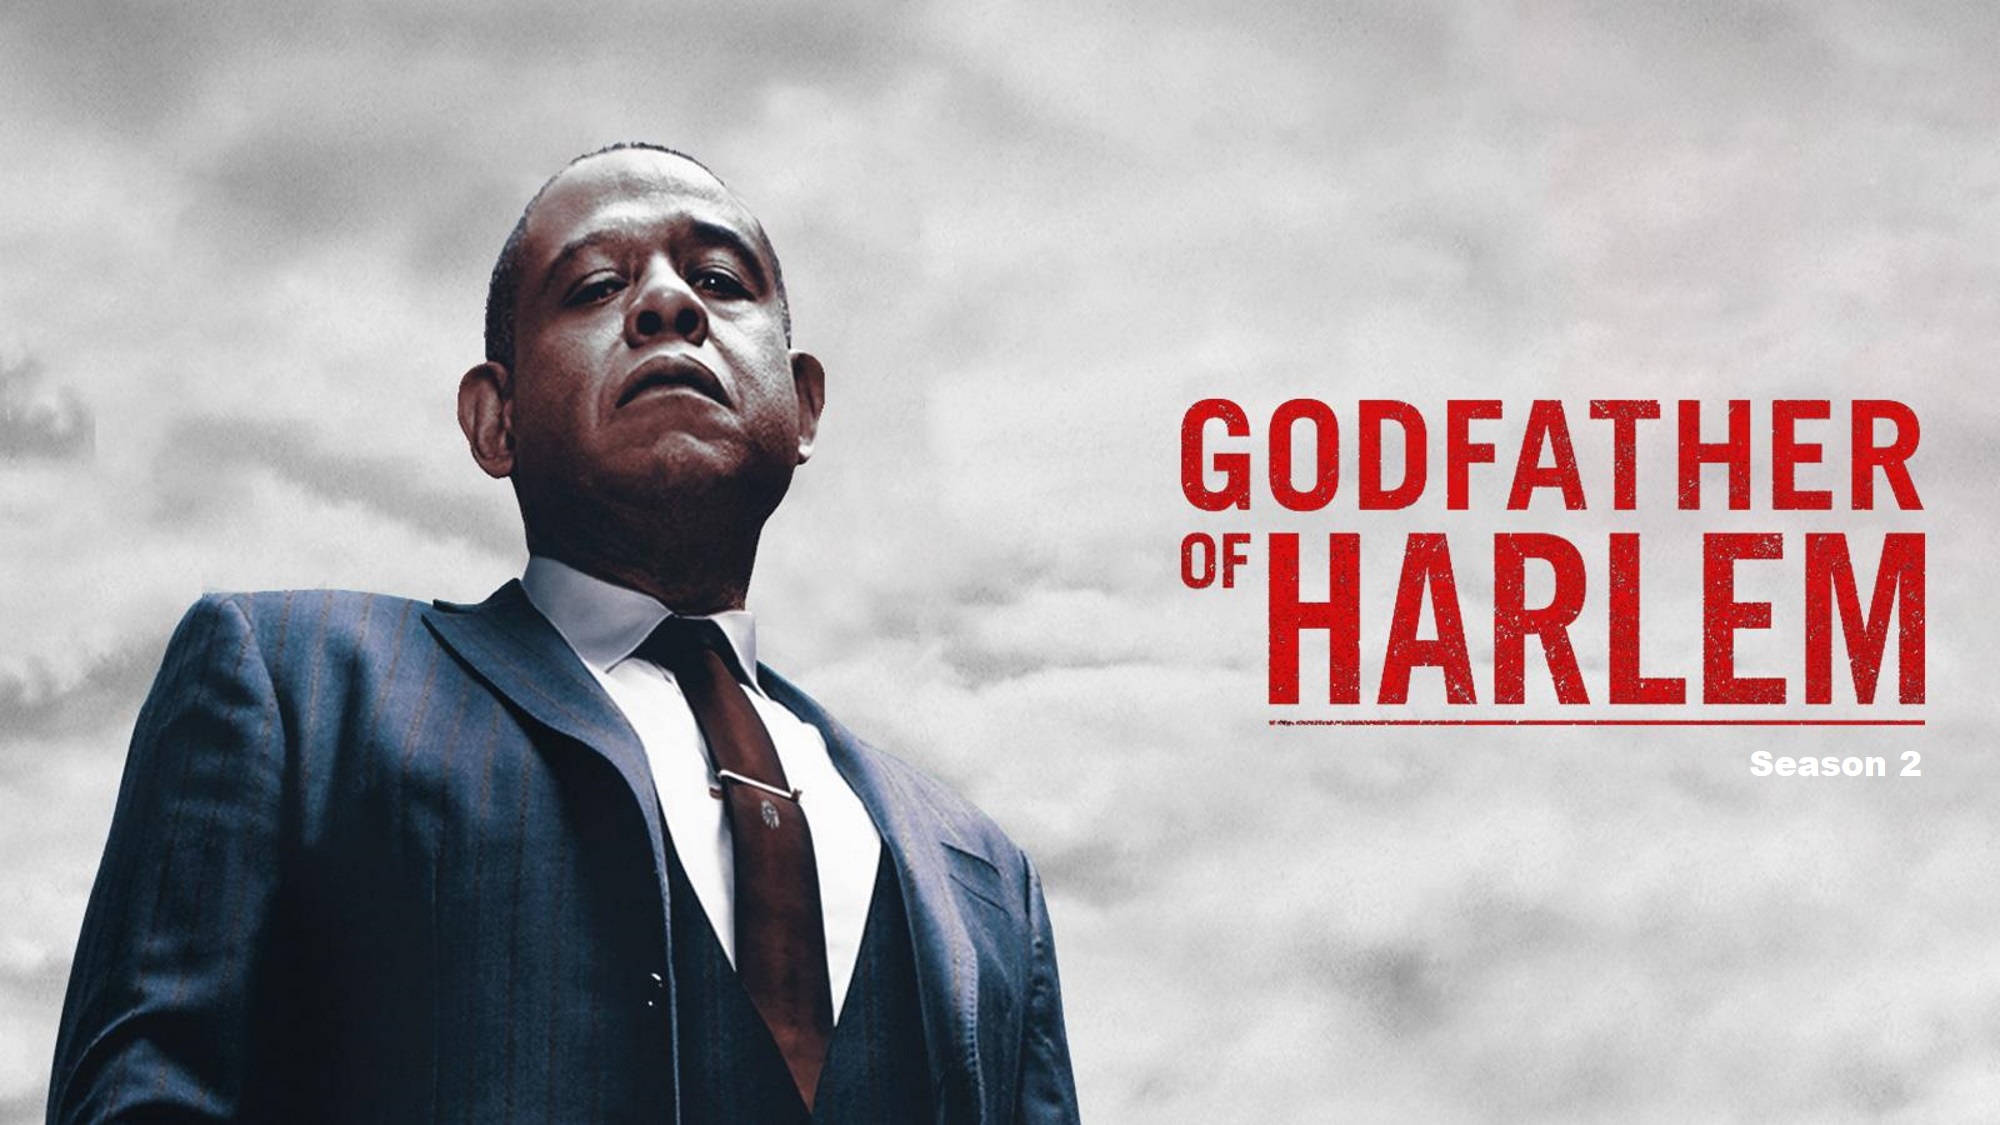 The Godfather of Harlem Season 2 